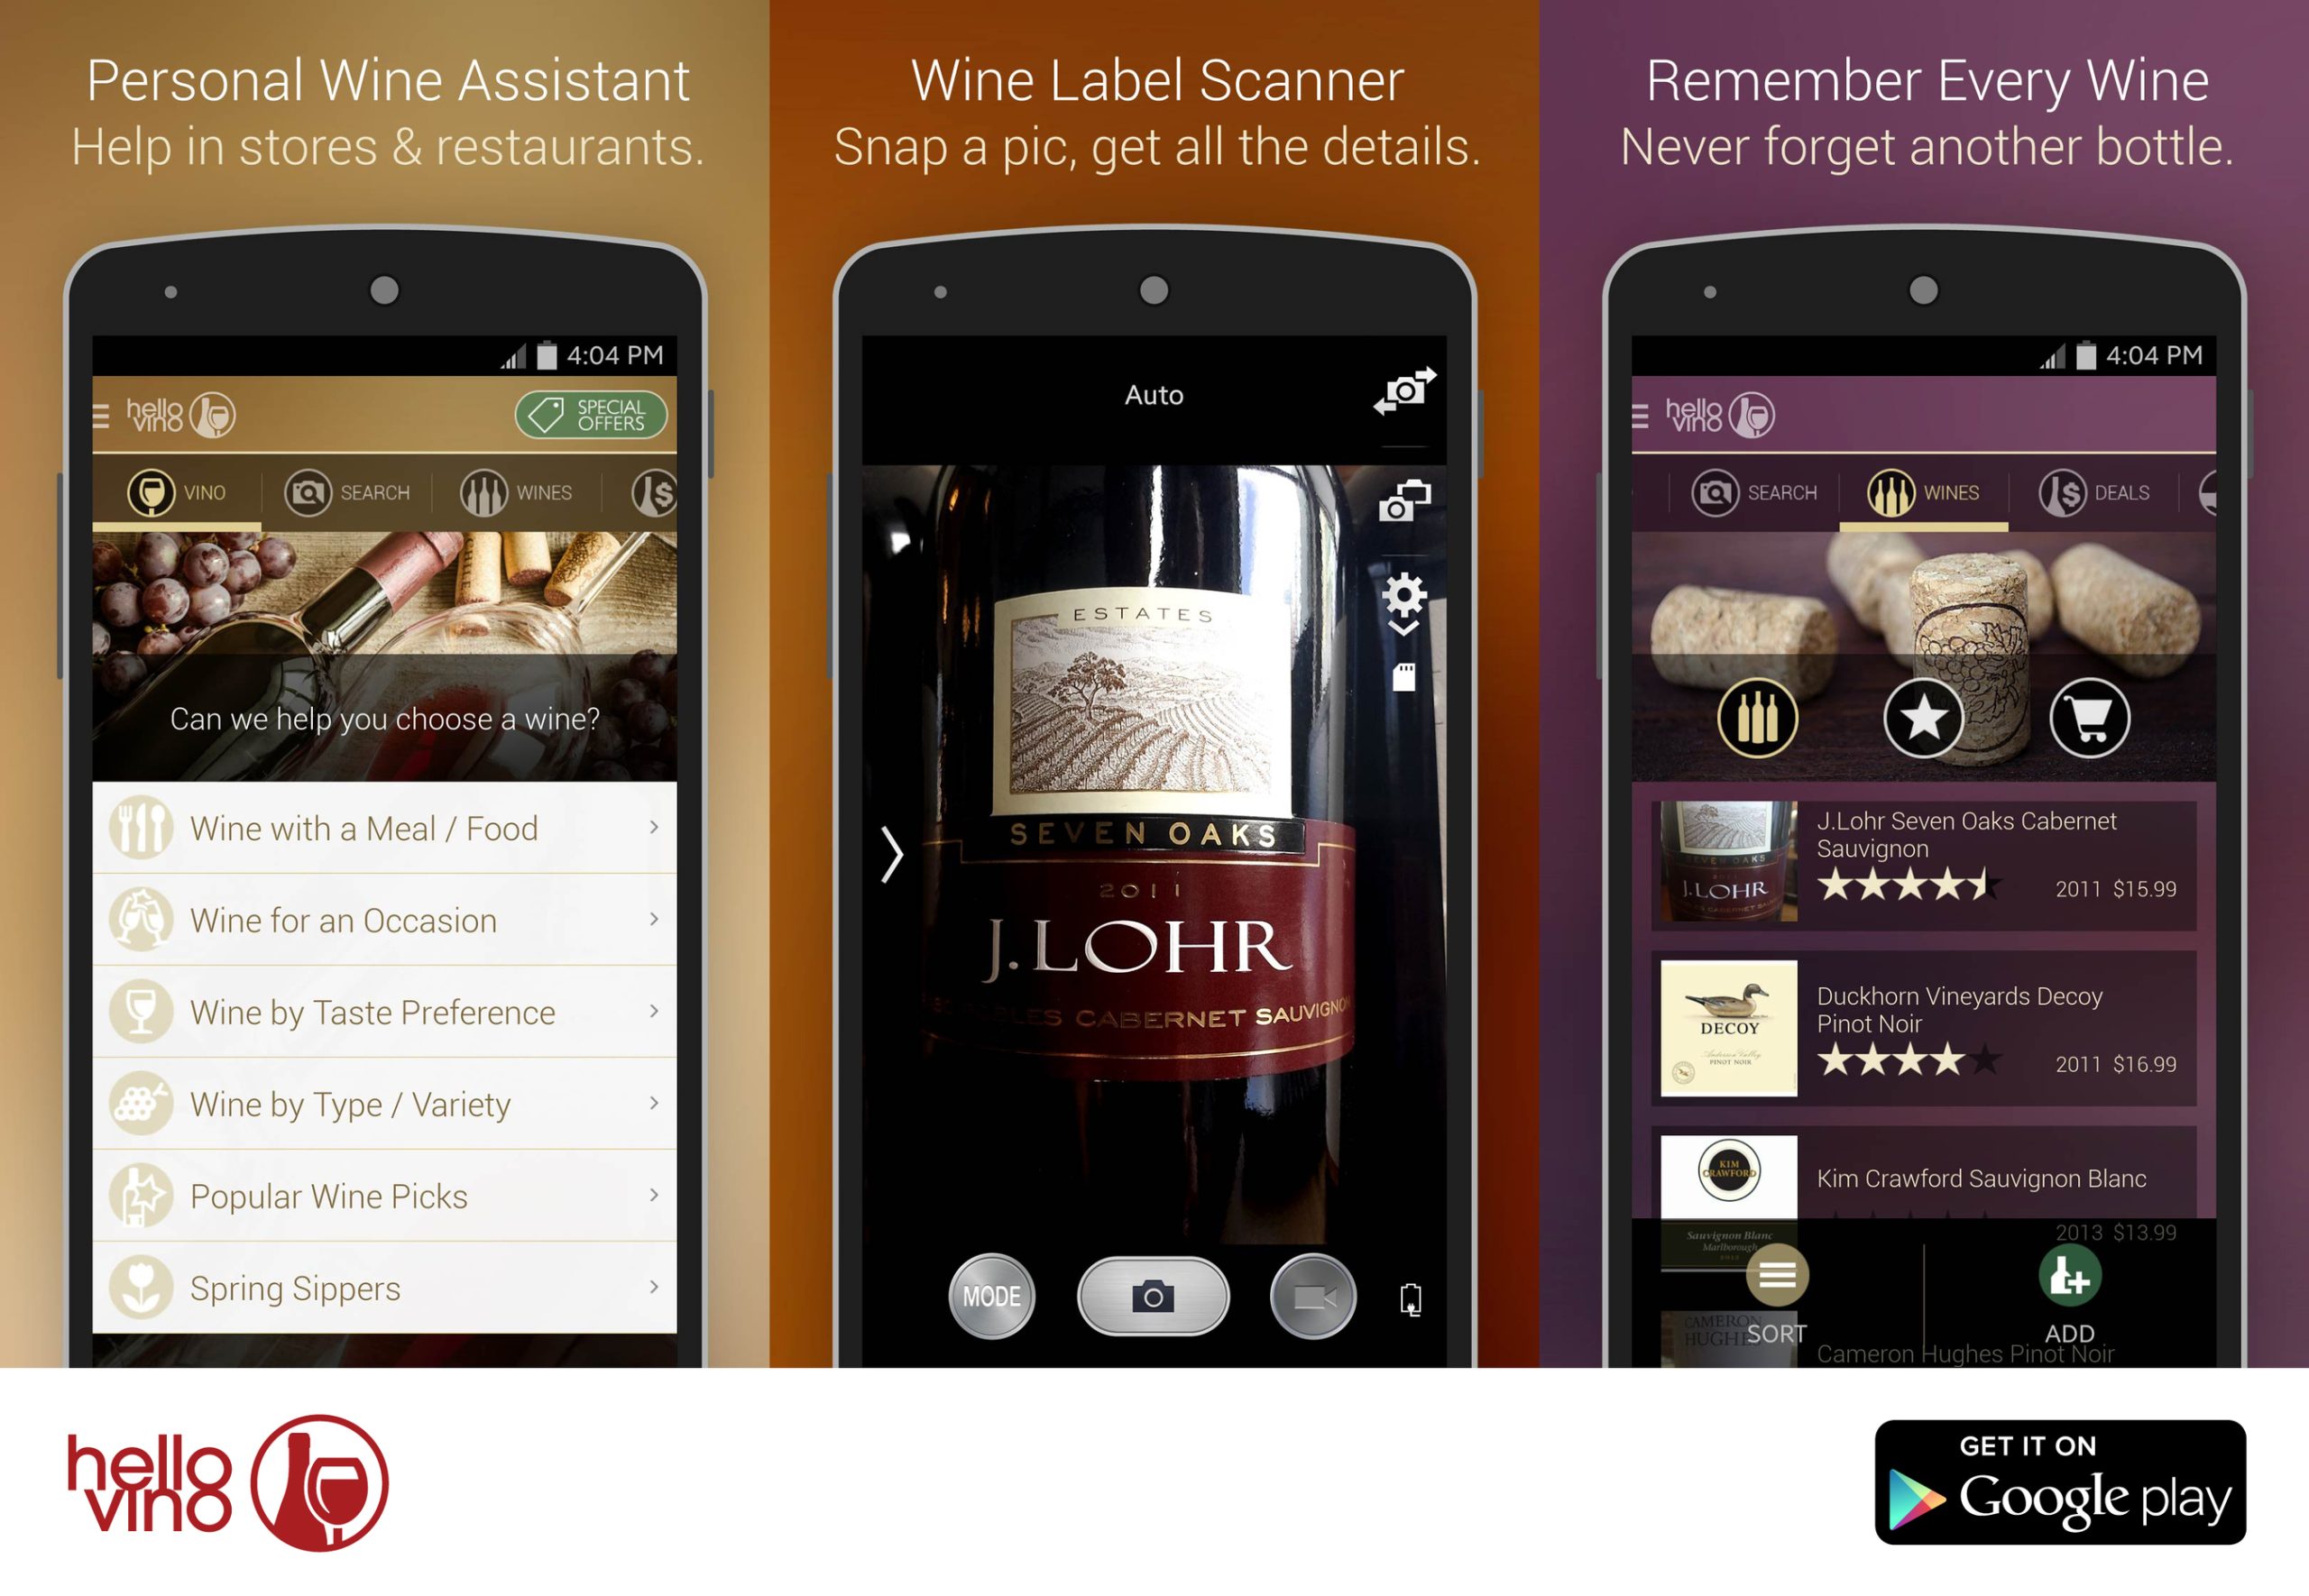 Hello Vino - Wine Assistant App on Google Play (Android) (PRNewsFoto/Hello Vino)